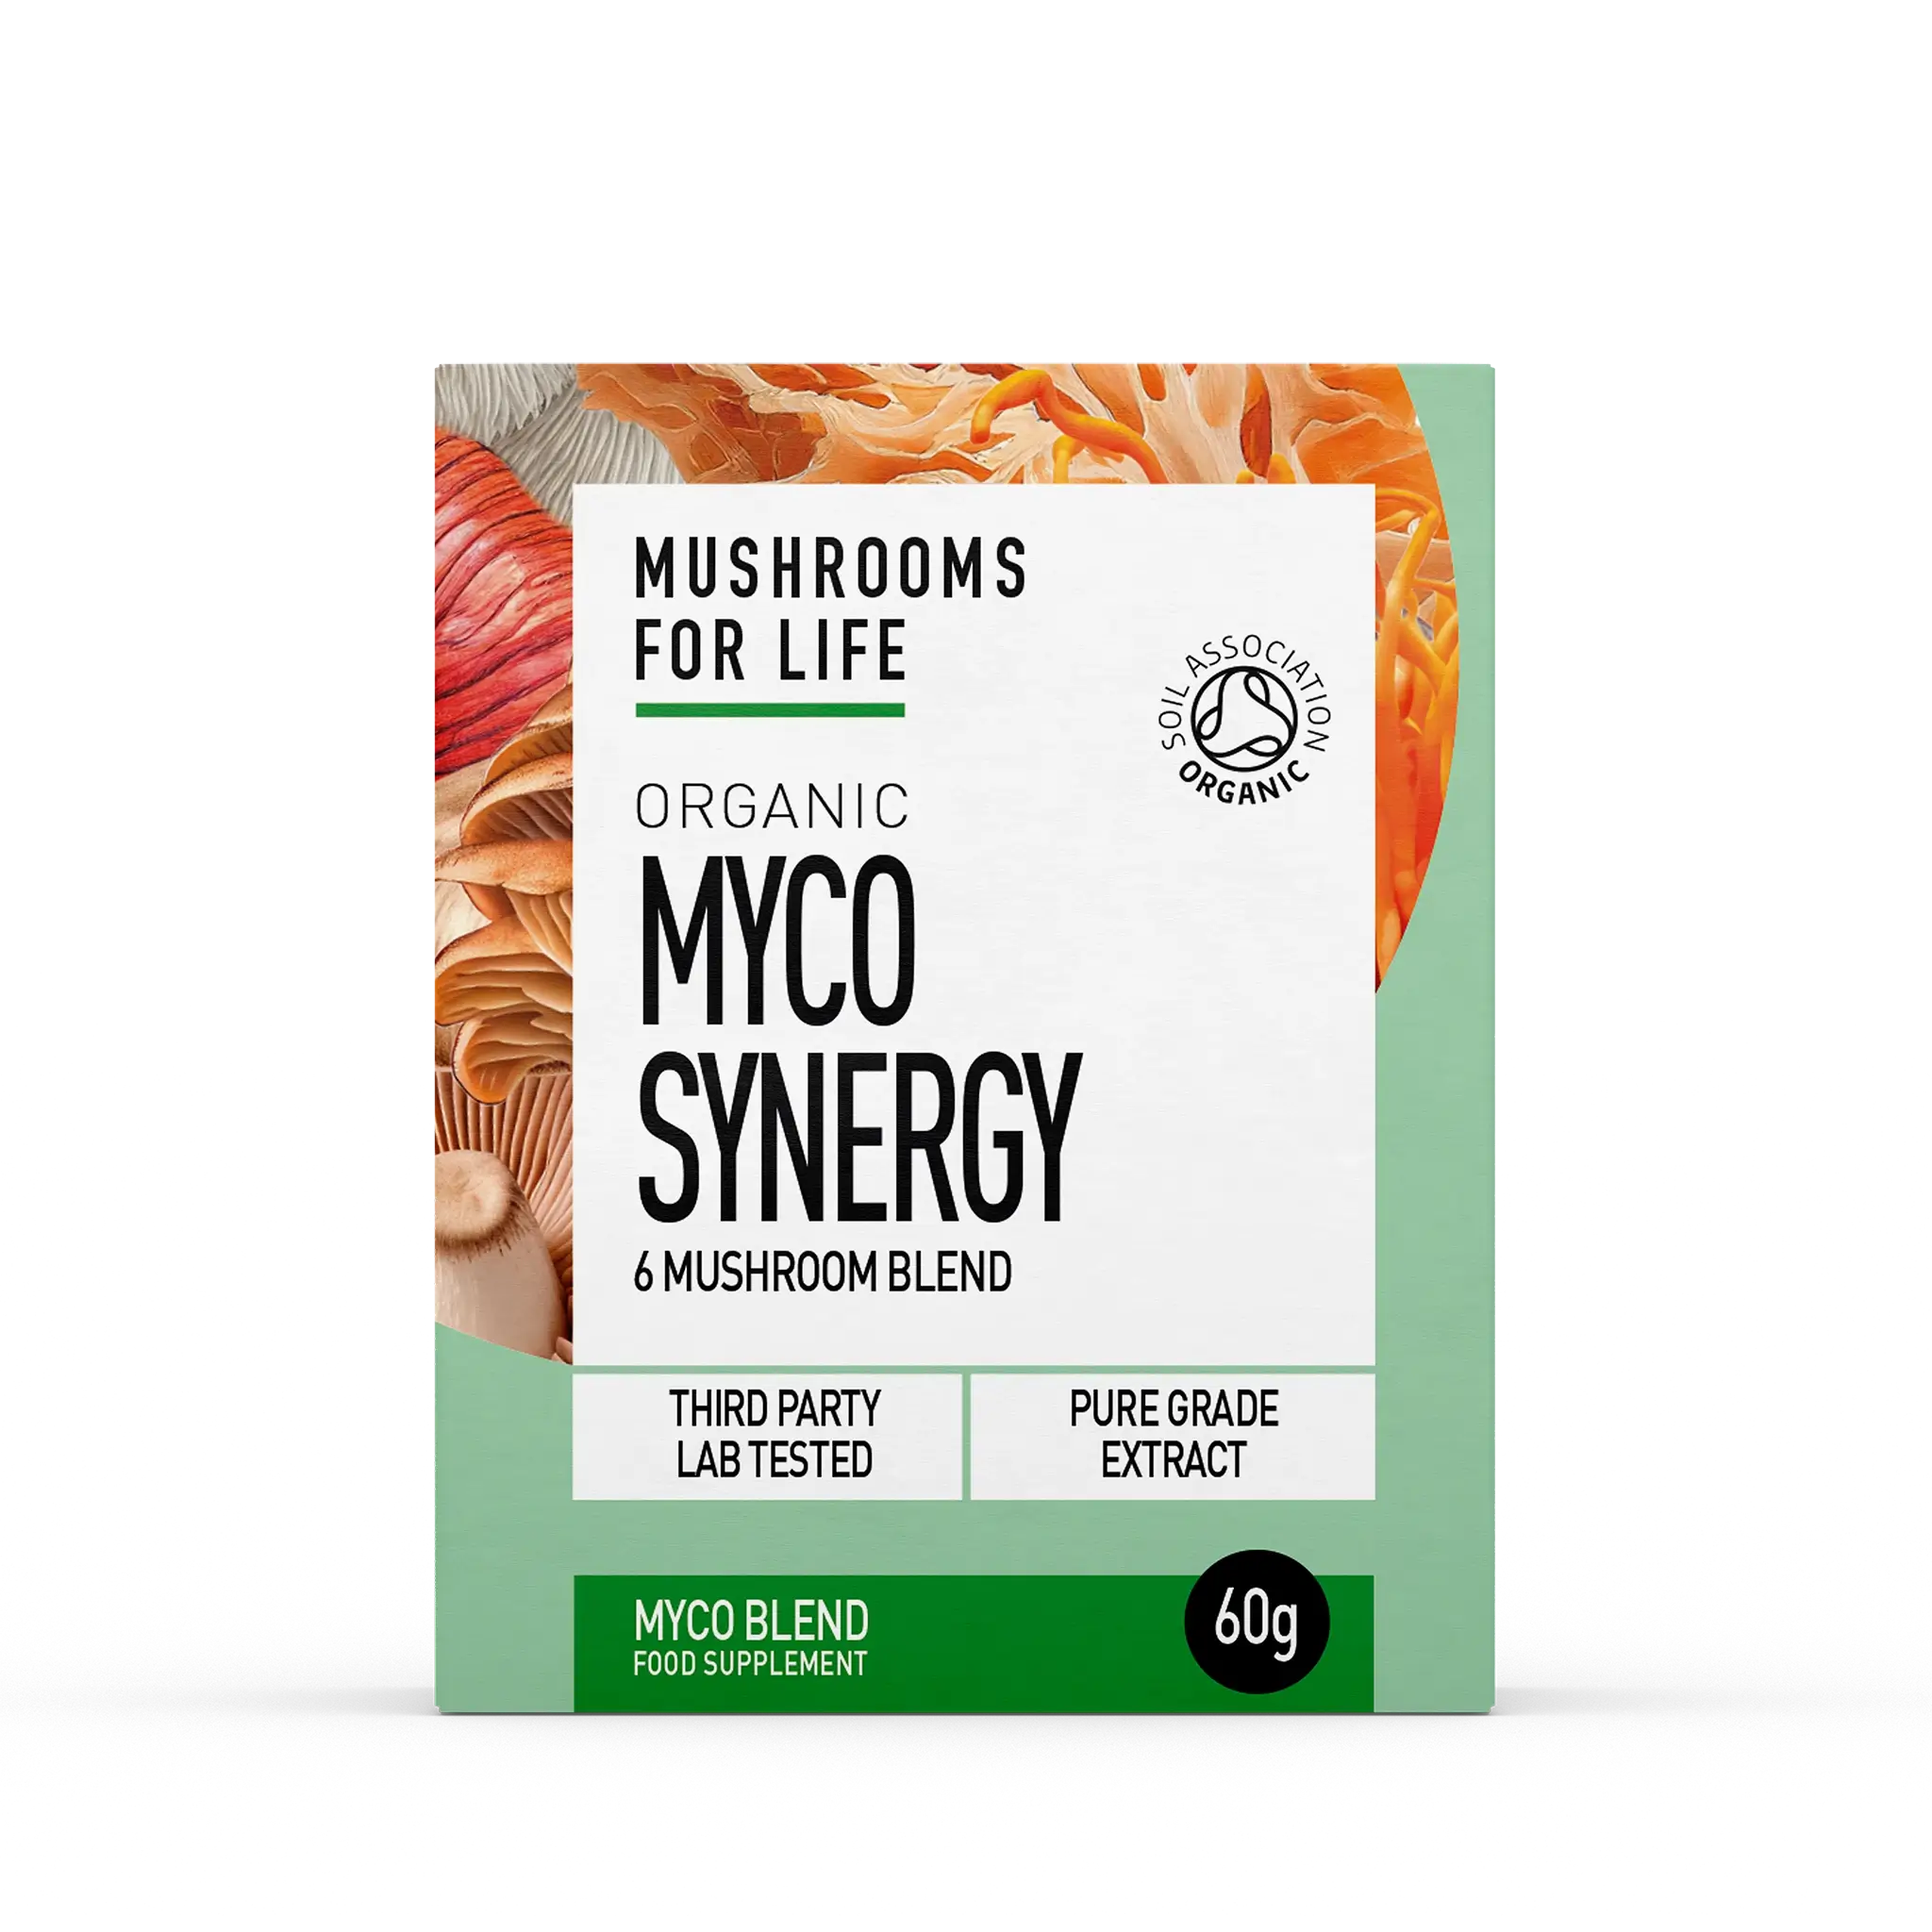 myco-synergy_a58ffcee-0bf7-4a56-9b9a-cb1f67cc5972.webp